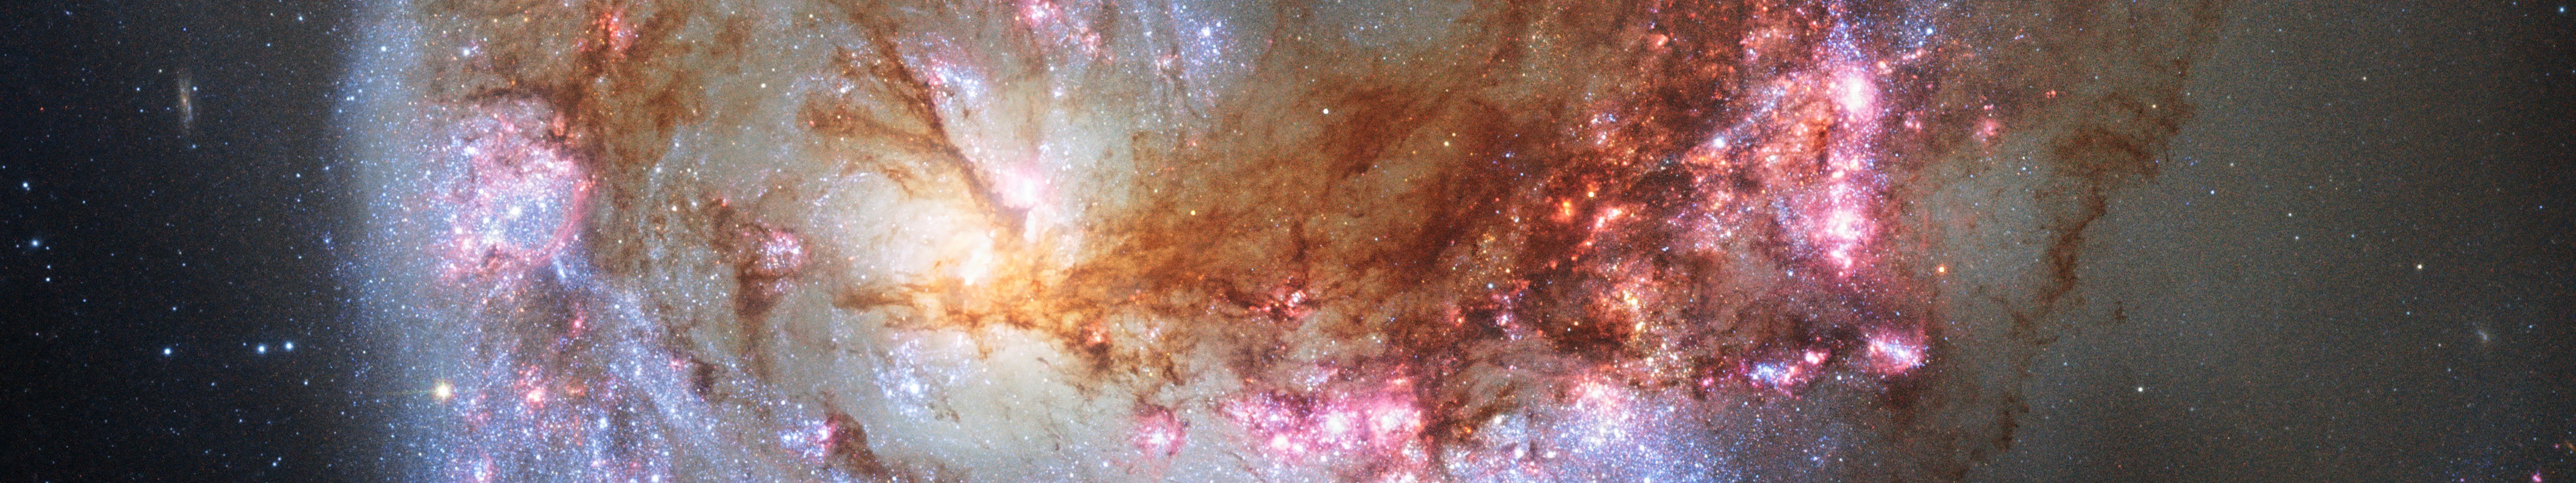 ESA, Space, Nebula, Hubble Deep Field, Stars, Suns, Galaxy, Antennae Galaxies, Triple screen, Multiple display Wallpaper